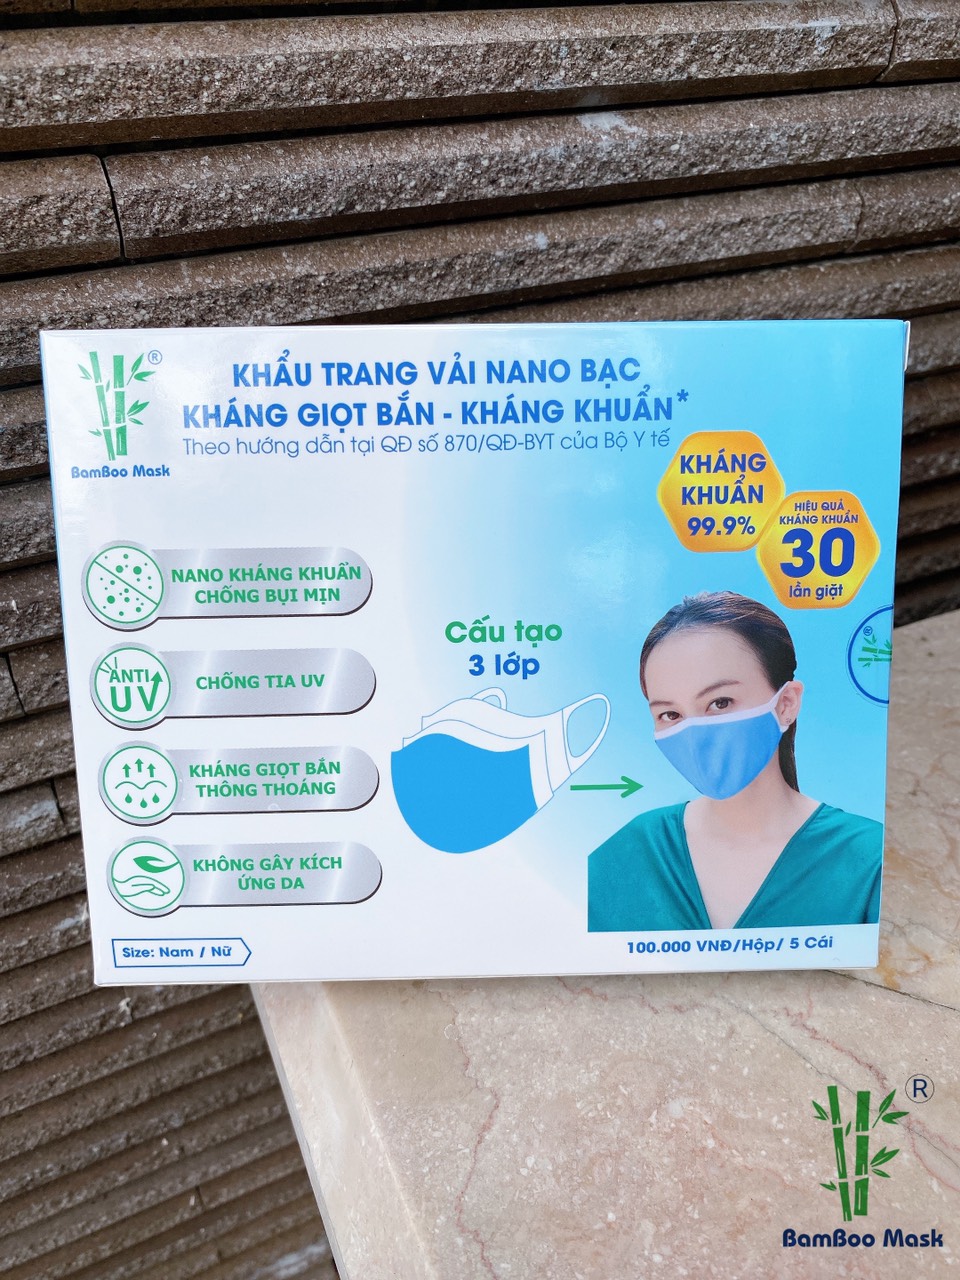 Khẩu Trang Vải Nano Bạc Bamboo Mask